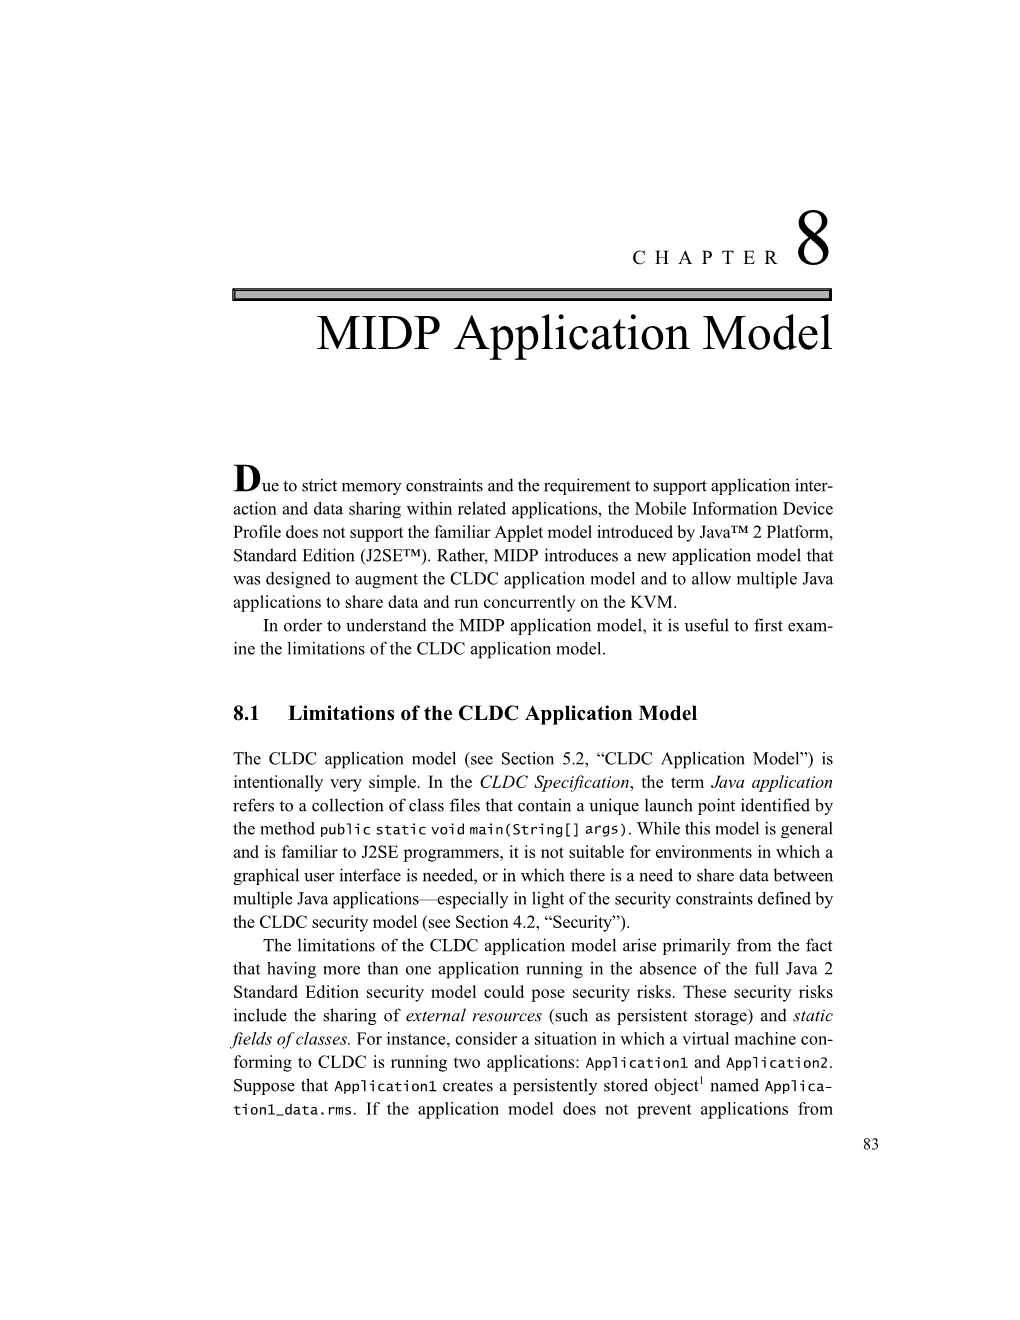 MIDP Application Model